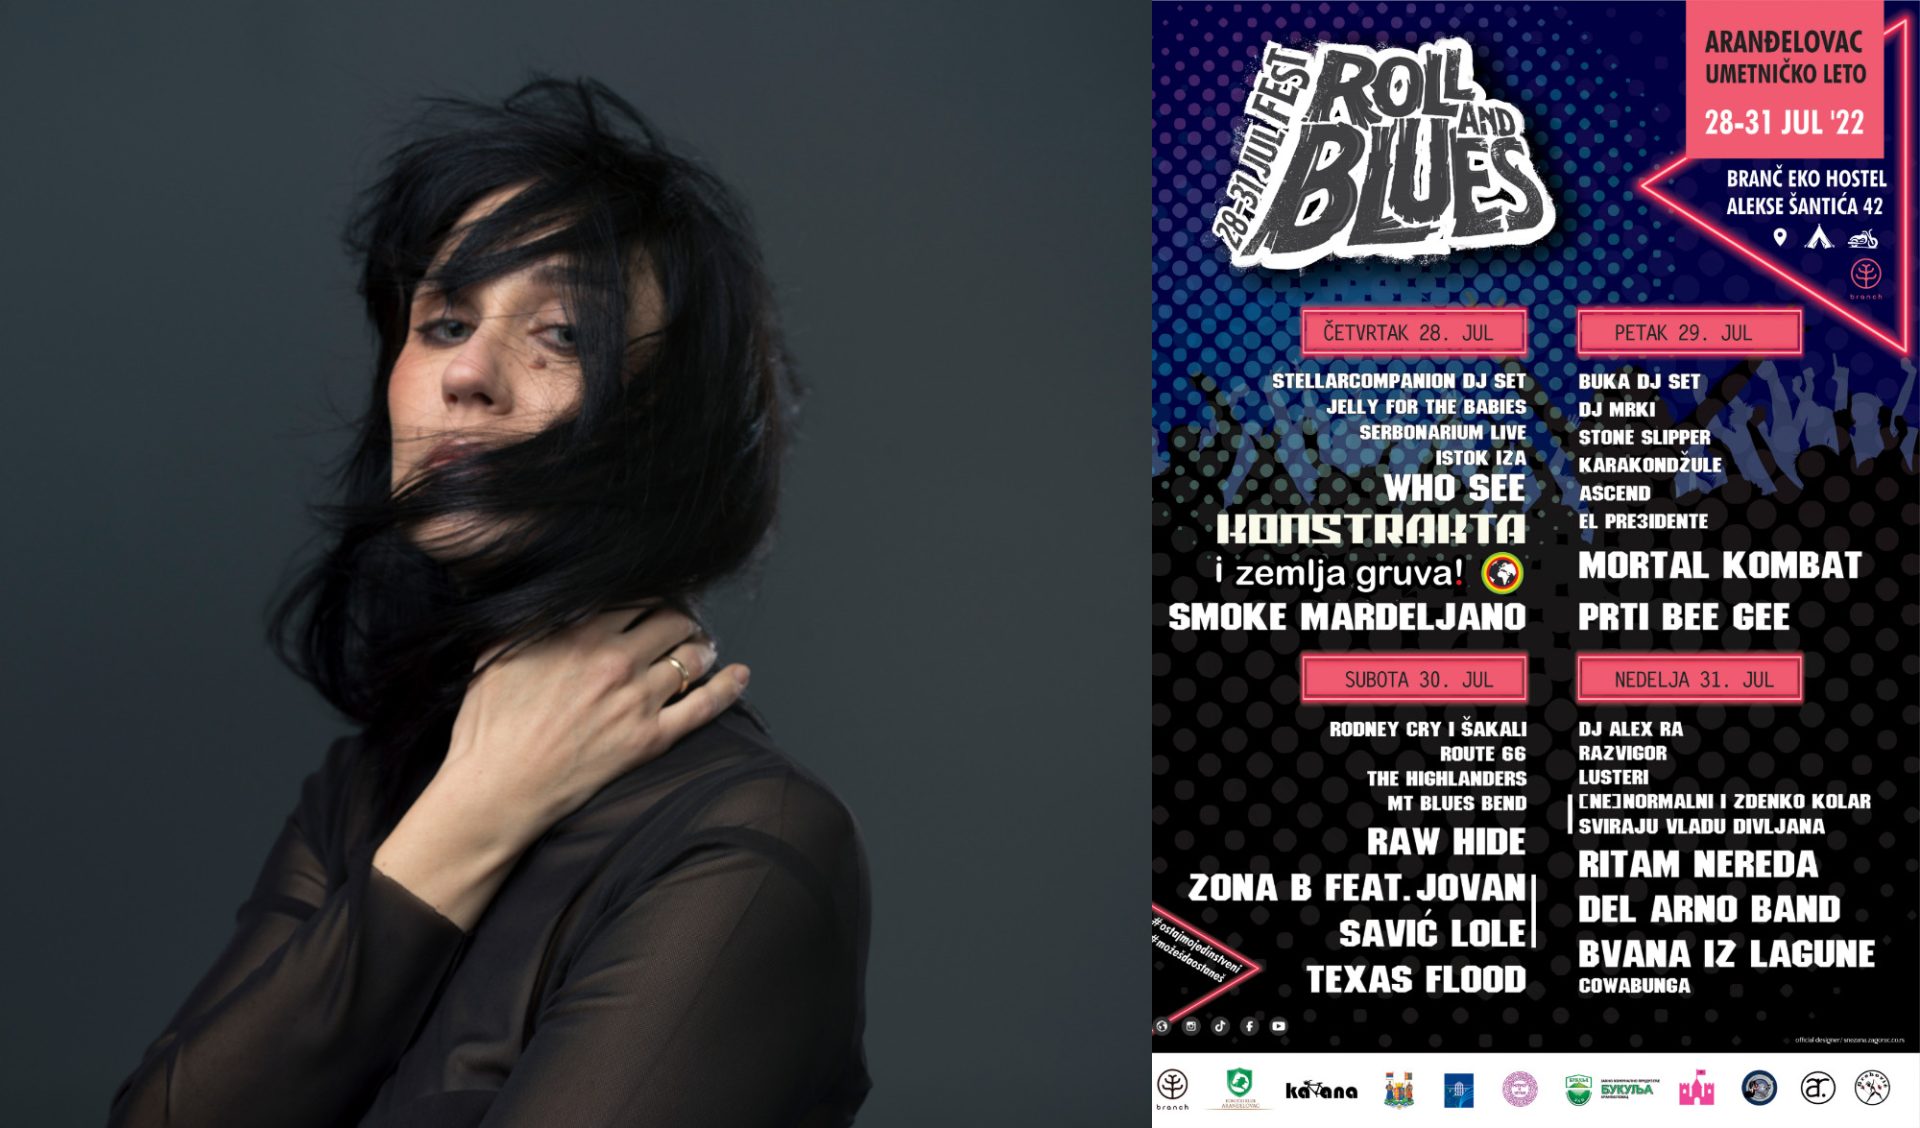 Konstrakta otvara festival Roll & Blues u Aranđelovcu